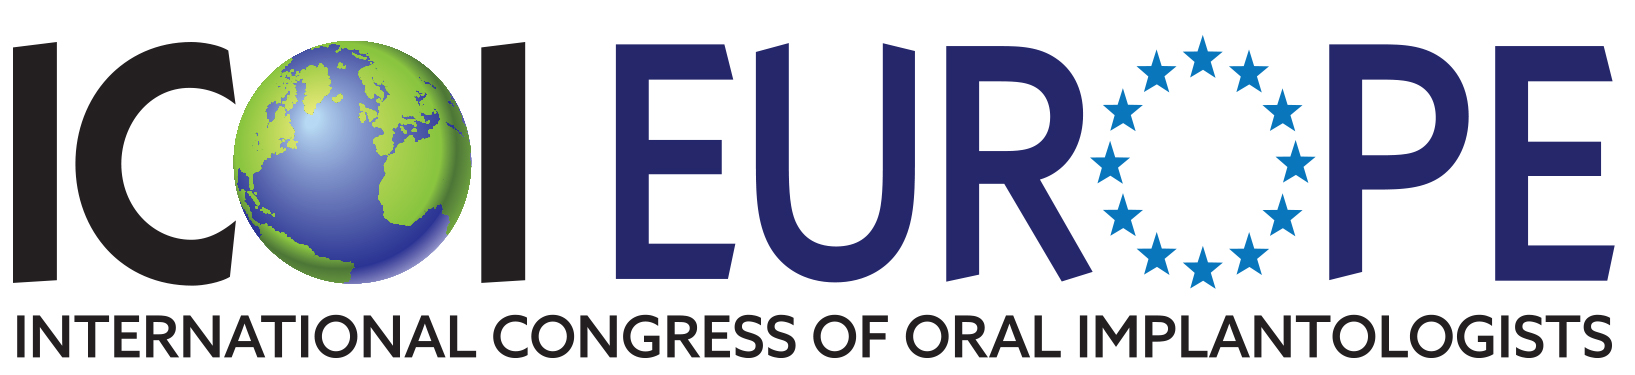 ICOI-Europe-Logo-Horiz-DK-BLUE